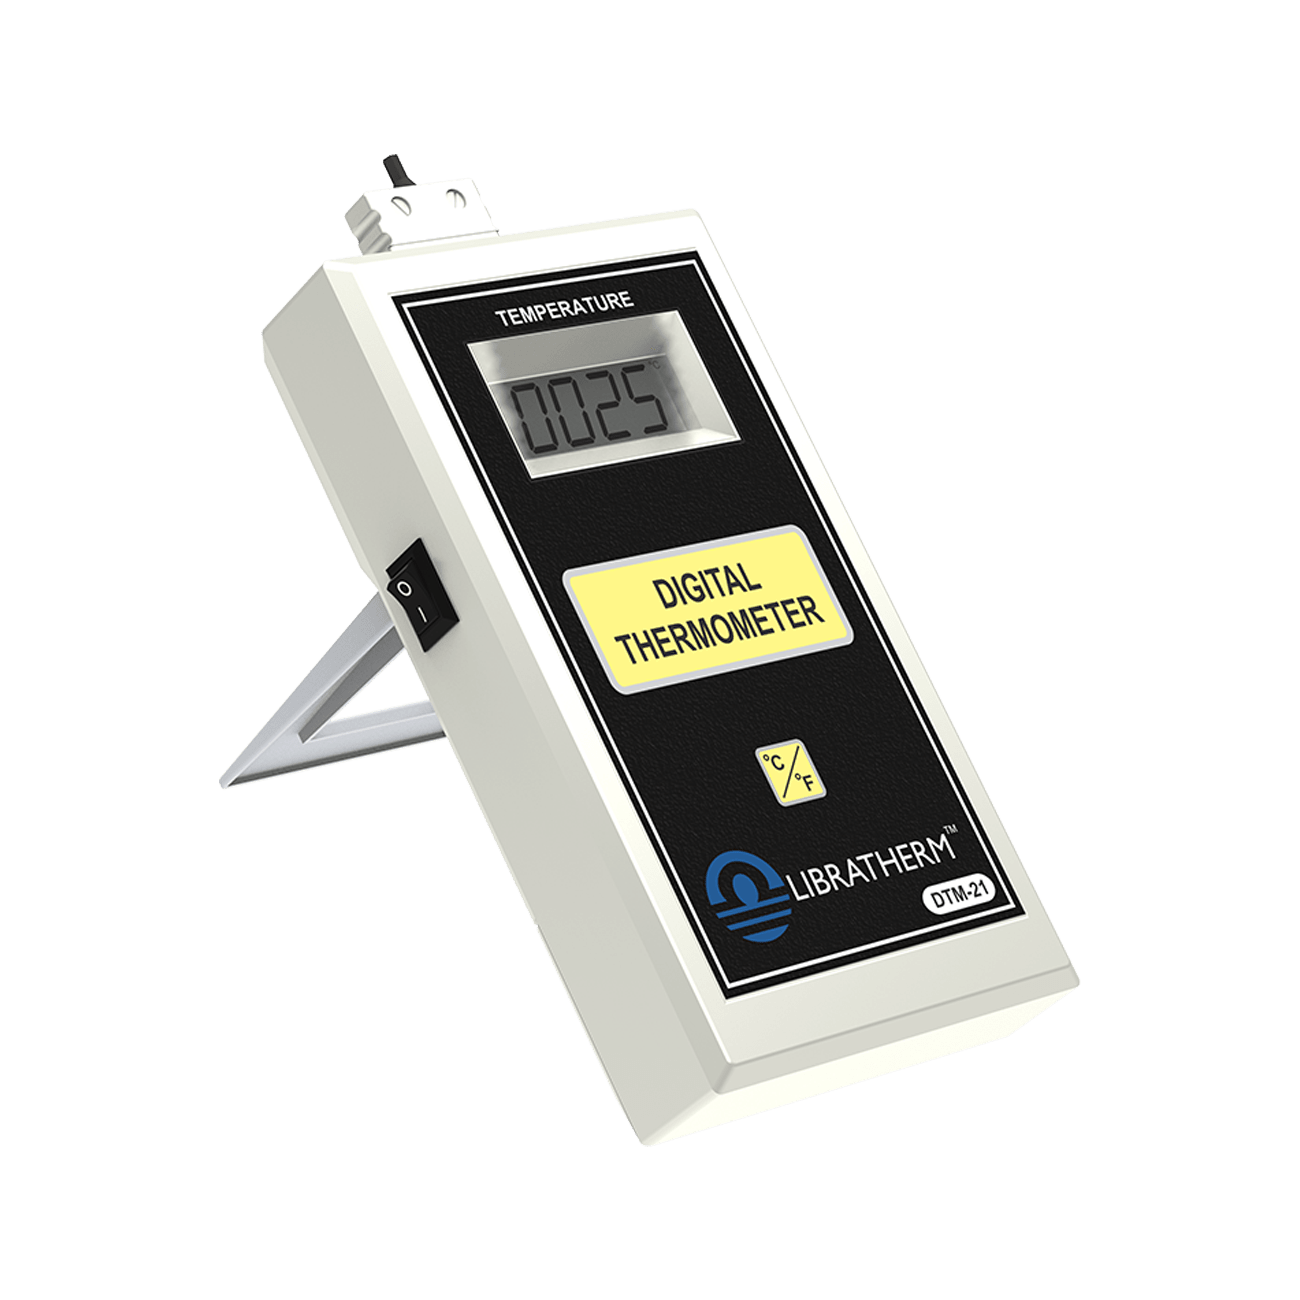 Portable Thermometer – DTM-21 – Libratherm Instruments